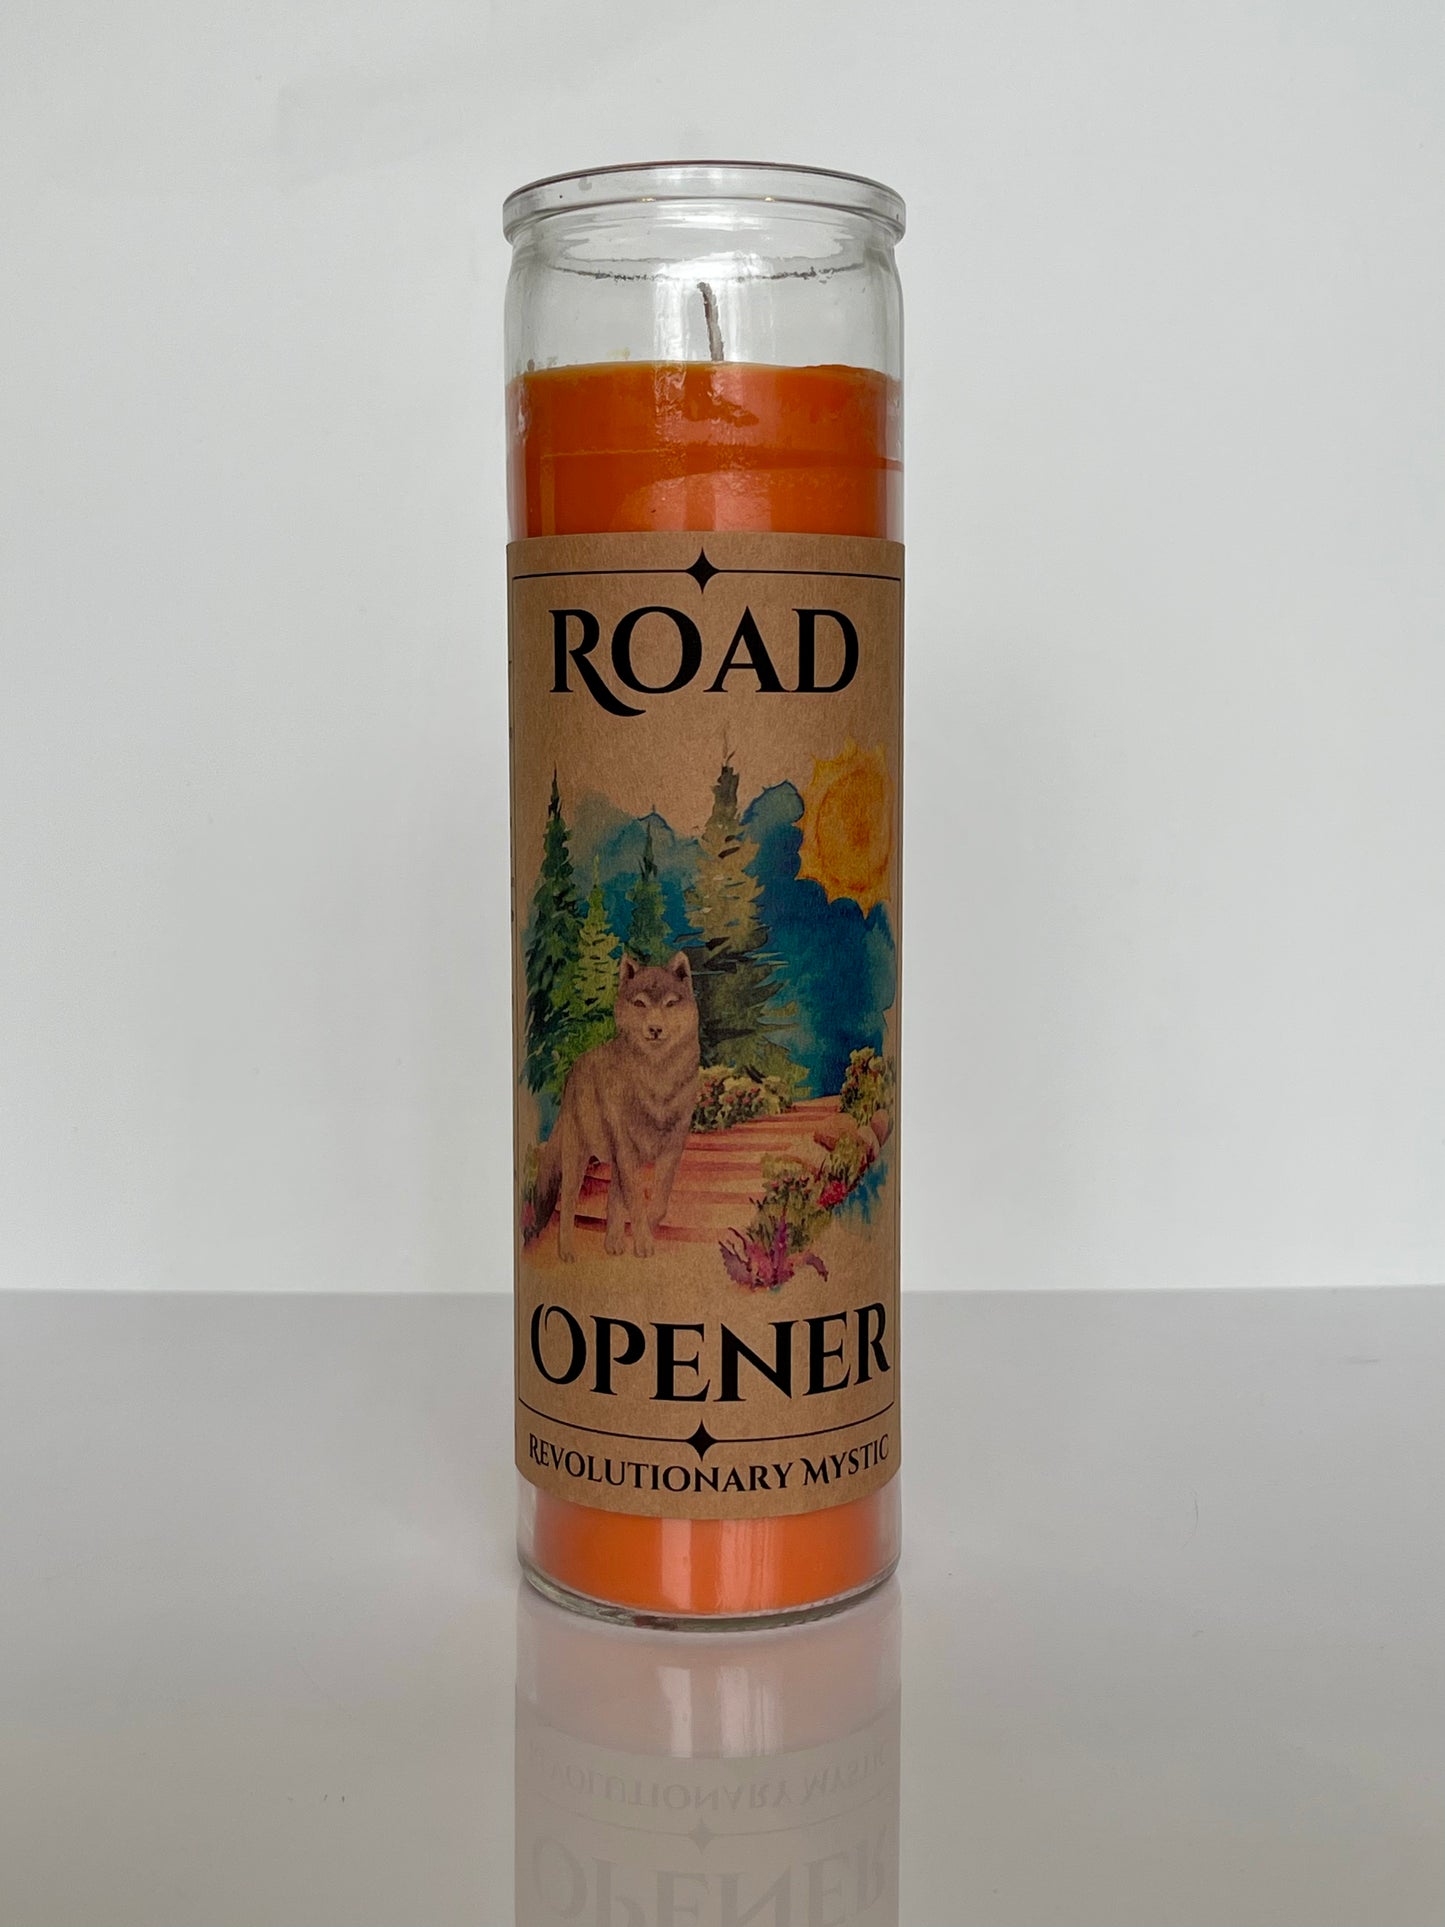 Road Opener Candle - Revolutionary Mystic